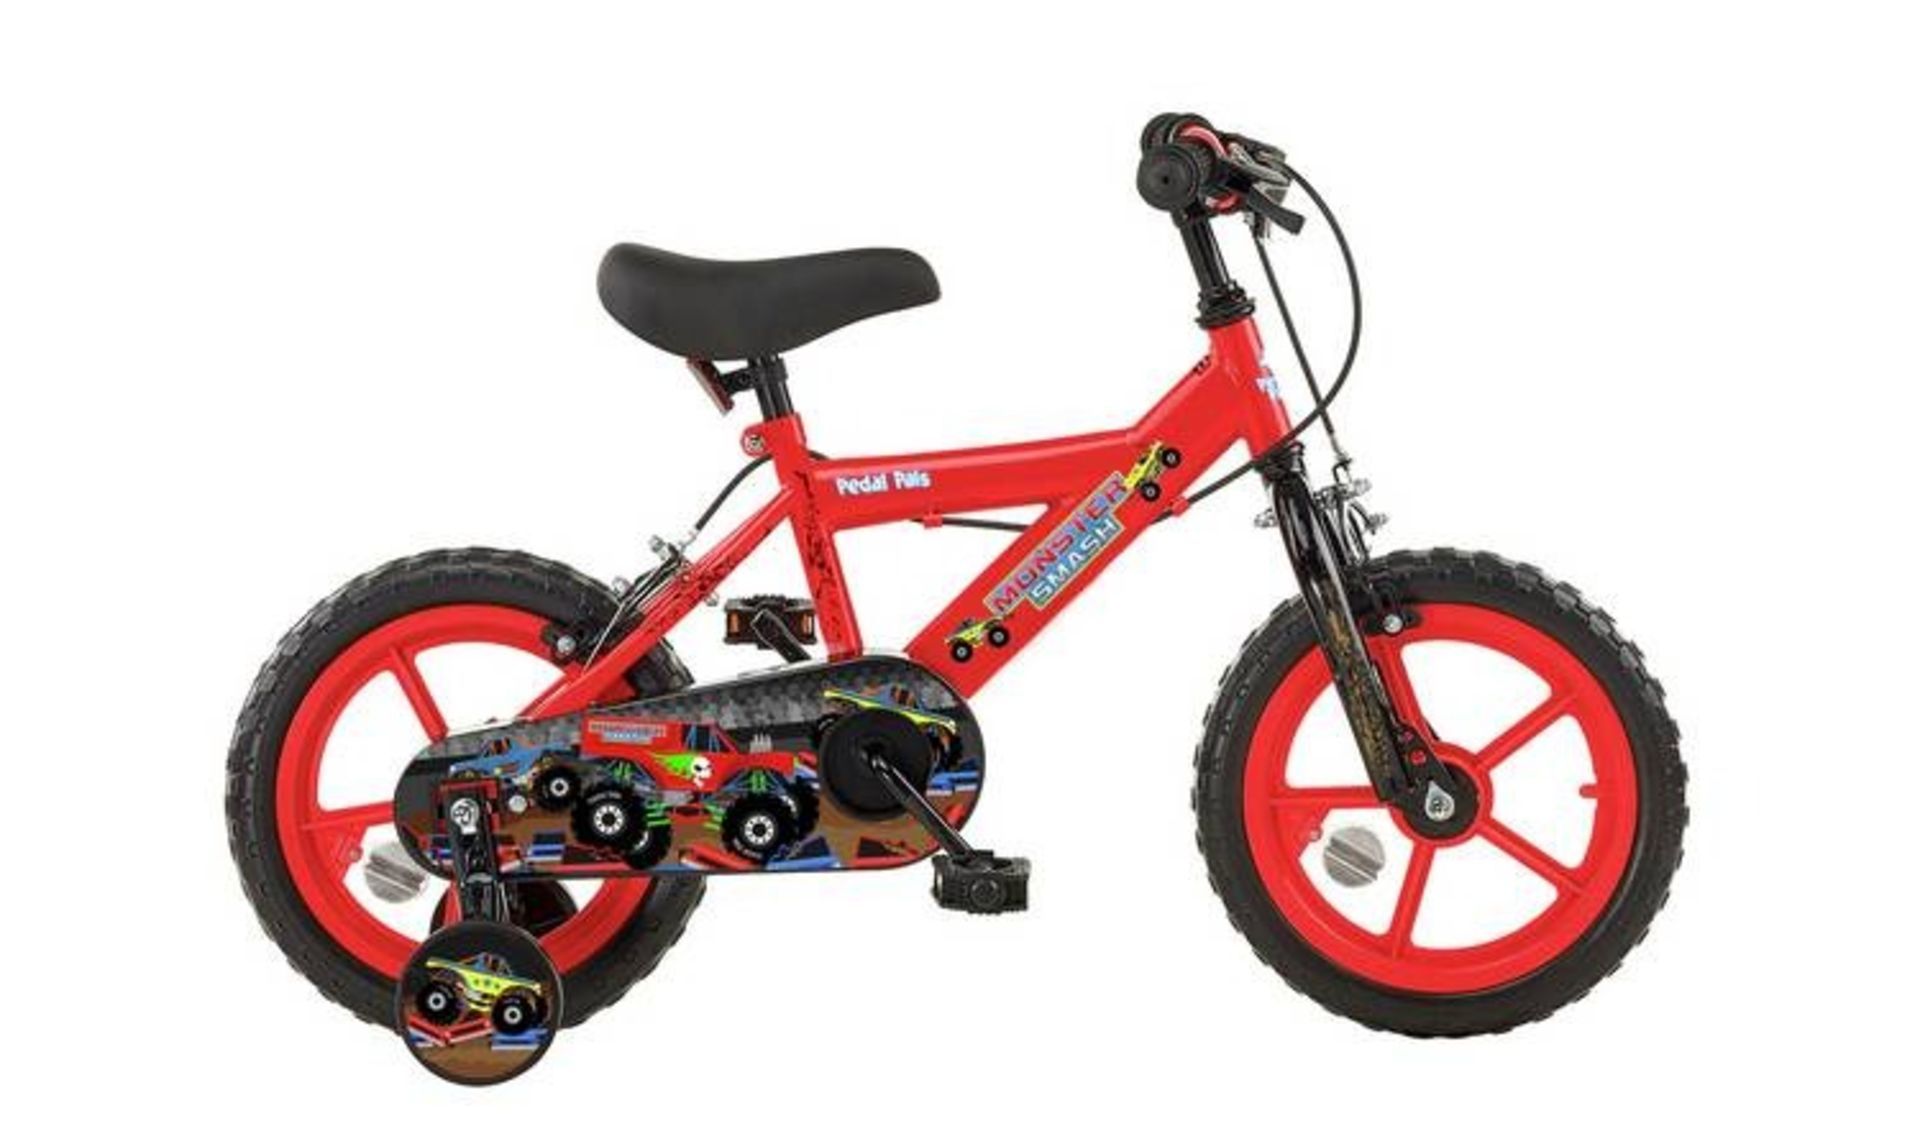 Pedal Pals 14 inch Wheel Size Kids Mountain Bike(LOCATION - PW) 17